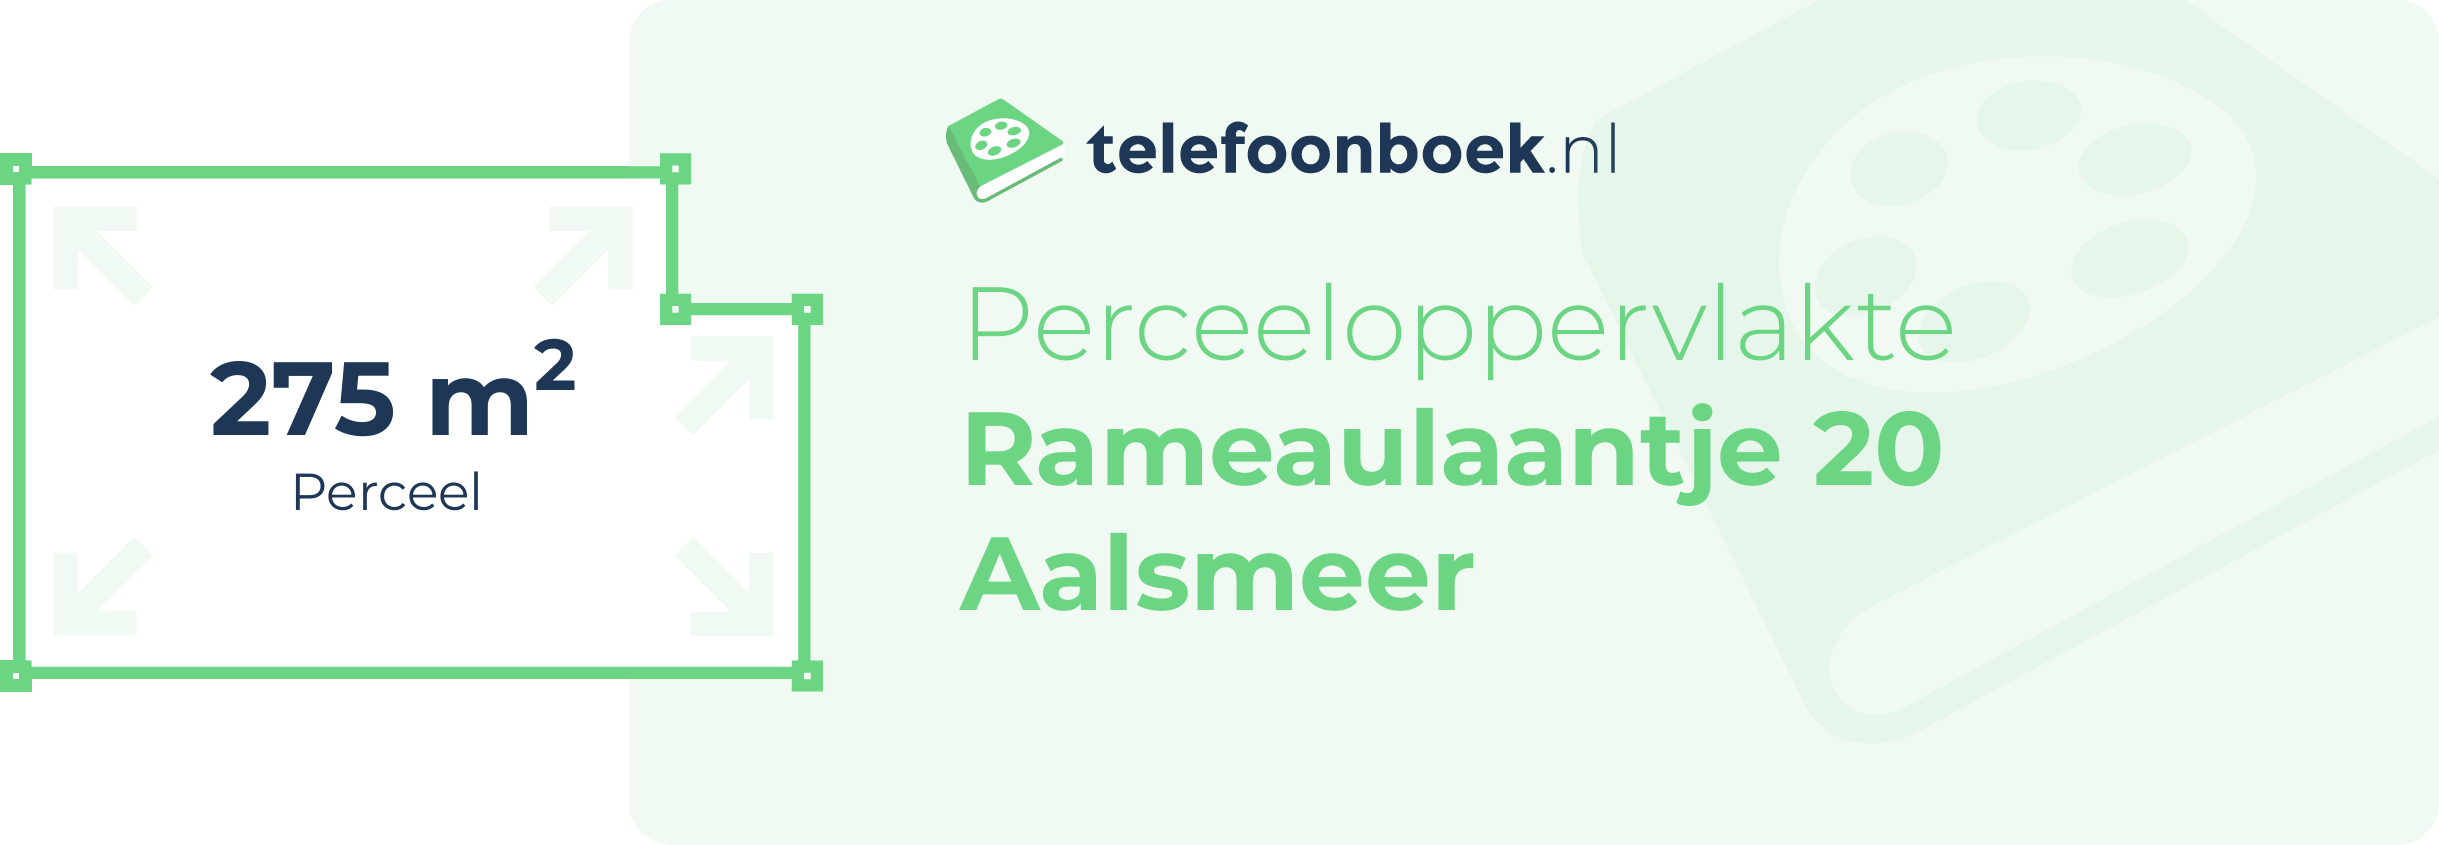 Perceeloppervlakte Rameaulaantje 20 Aalsmeer